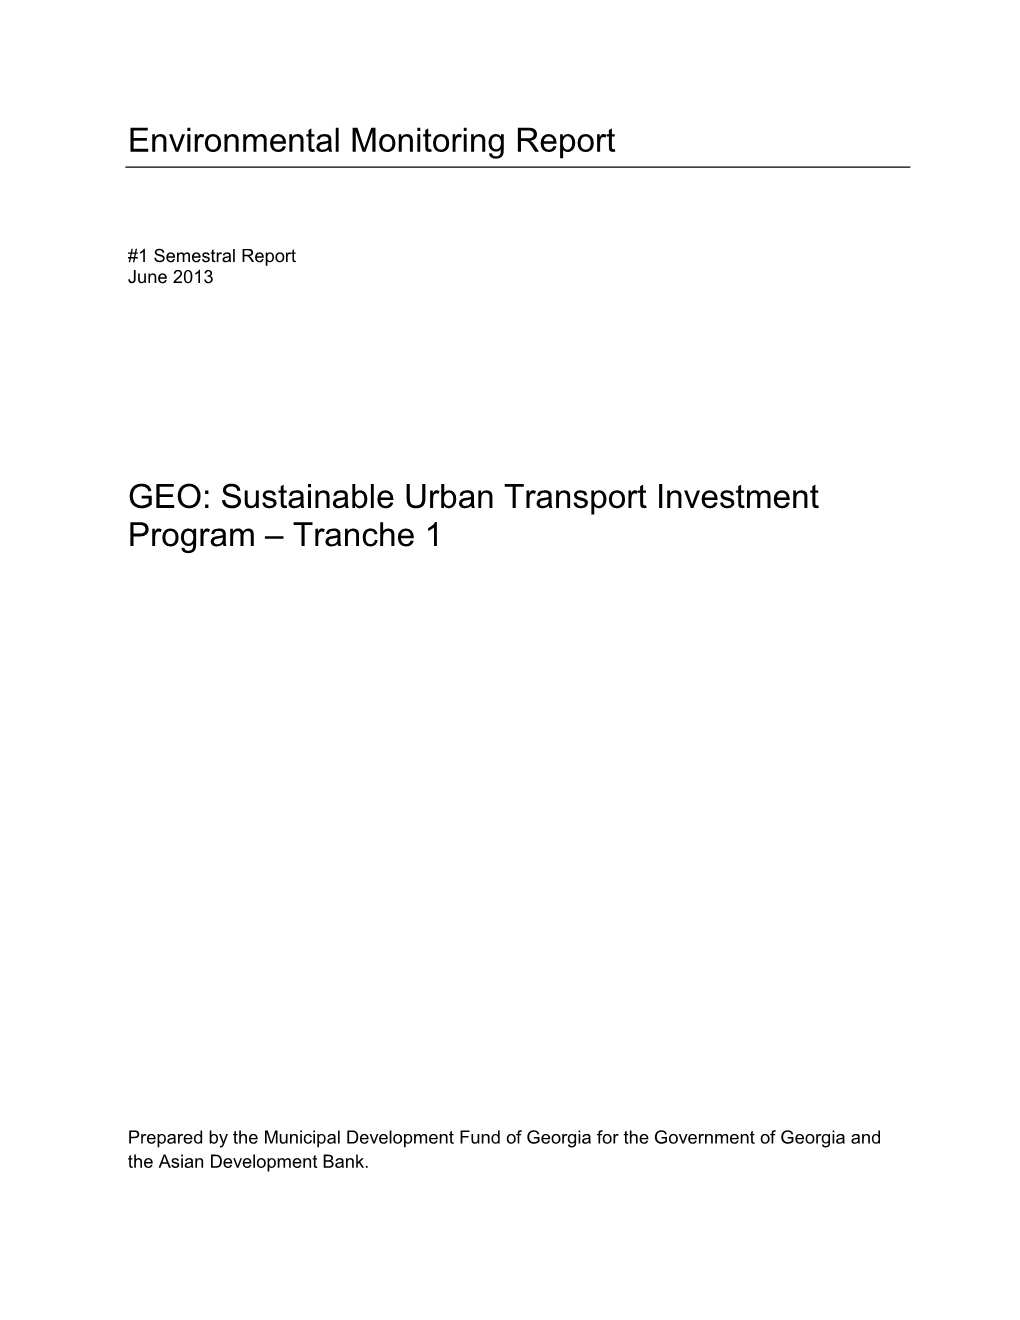 42414-023: Sustainable Urban Transport Investment Program